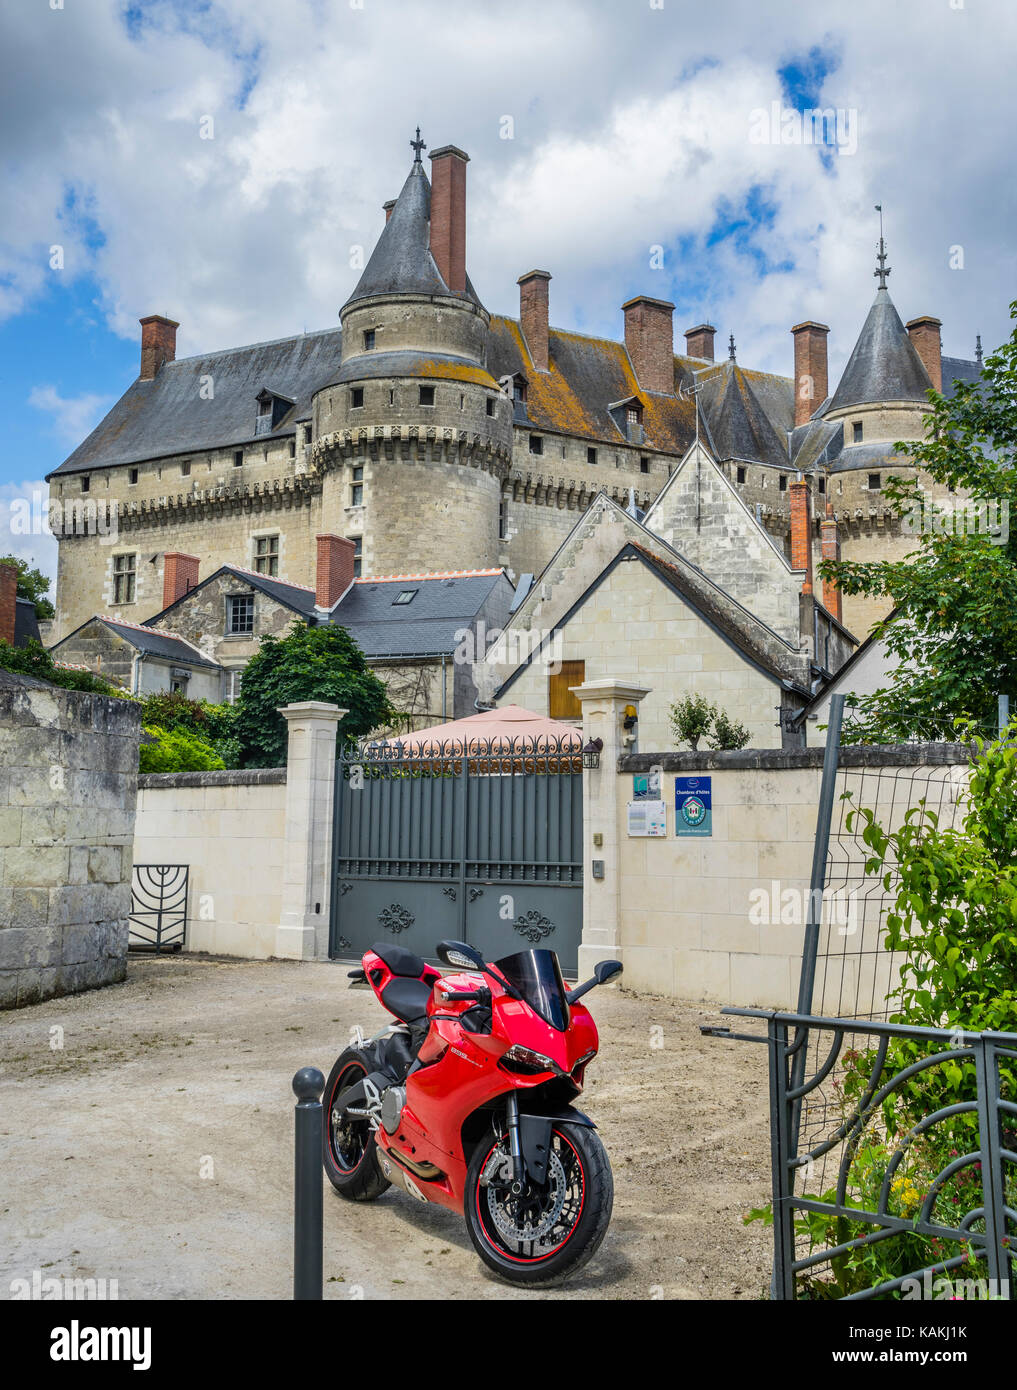 France, Indre-et-Loire department, Touraine, Langeais, back alley view of the towers and battlements of Château de Langeais Stock Photo